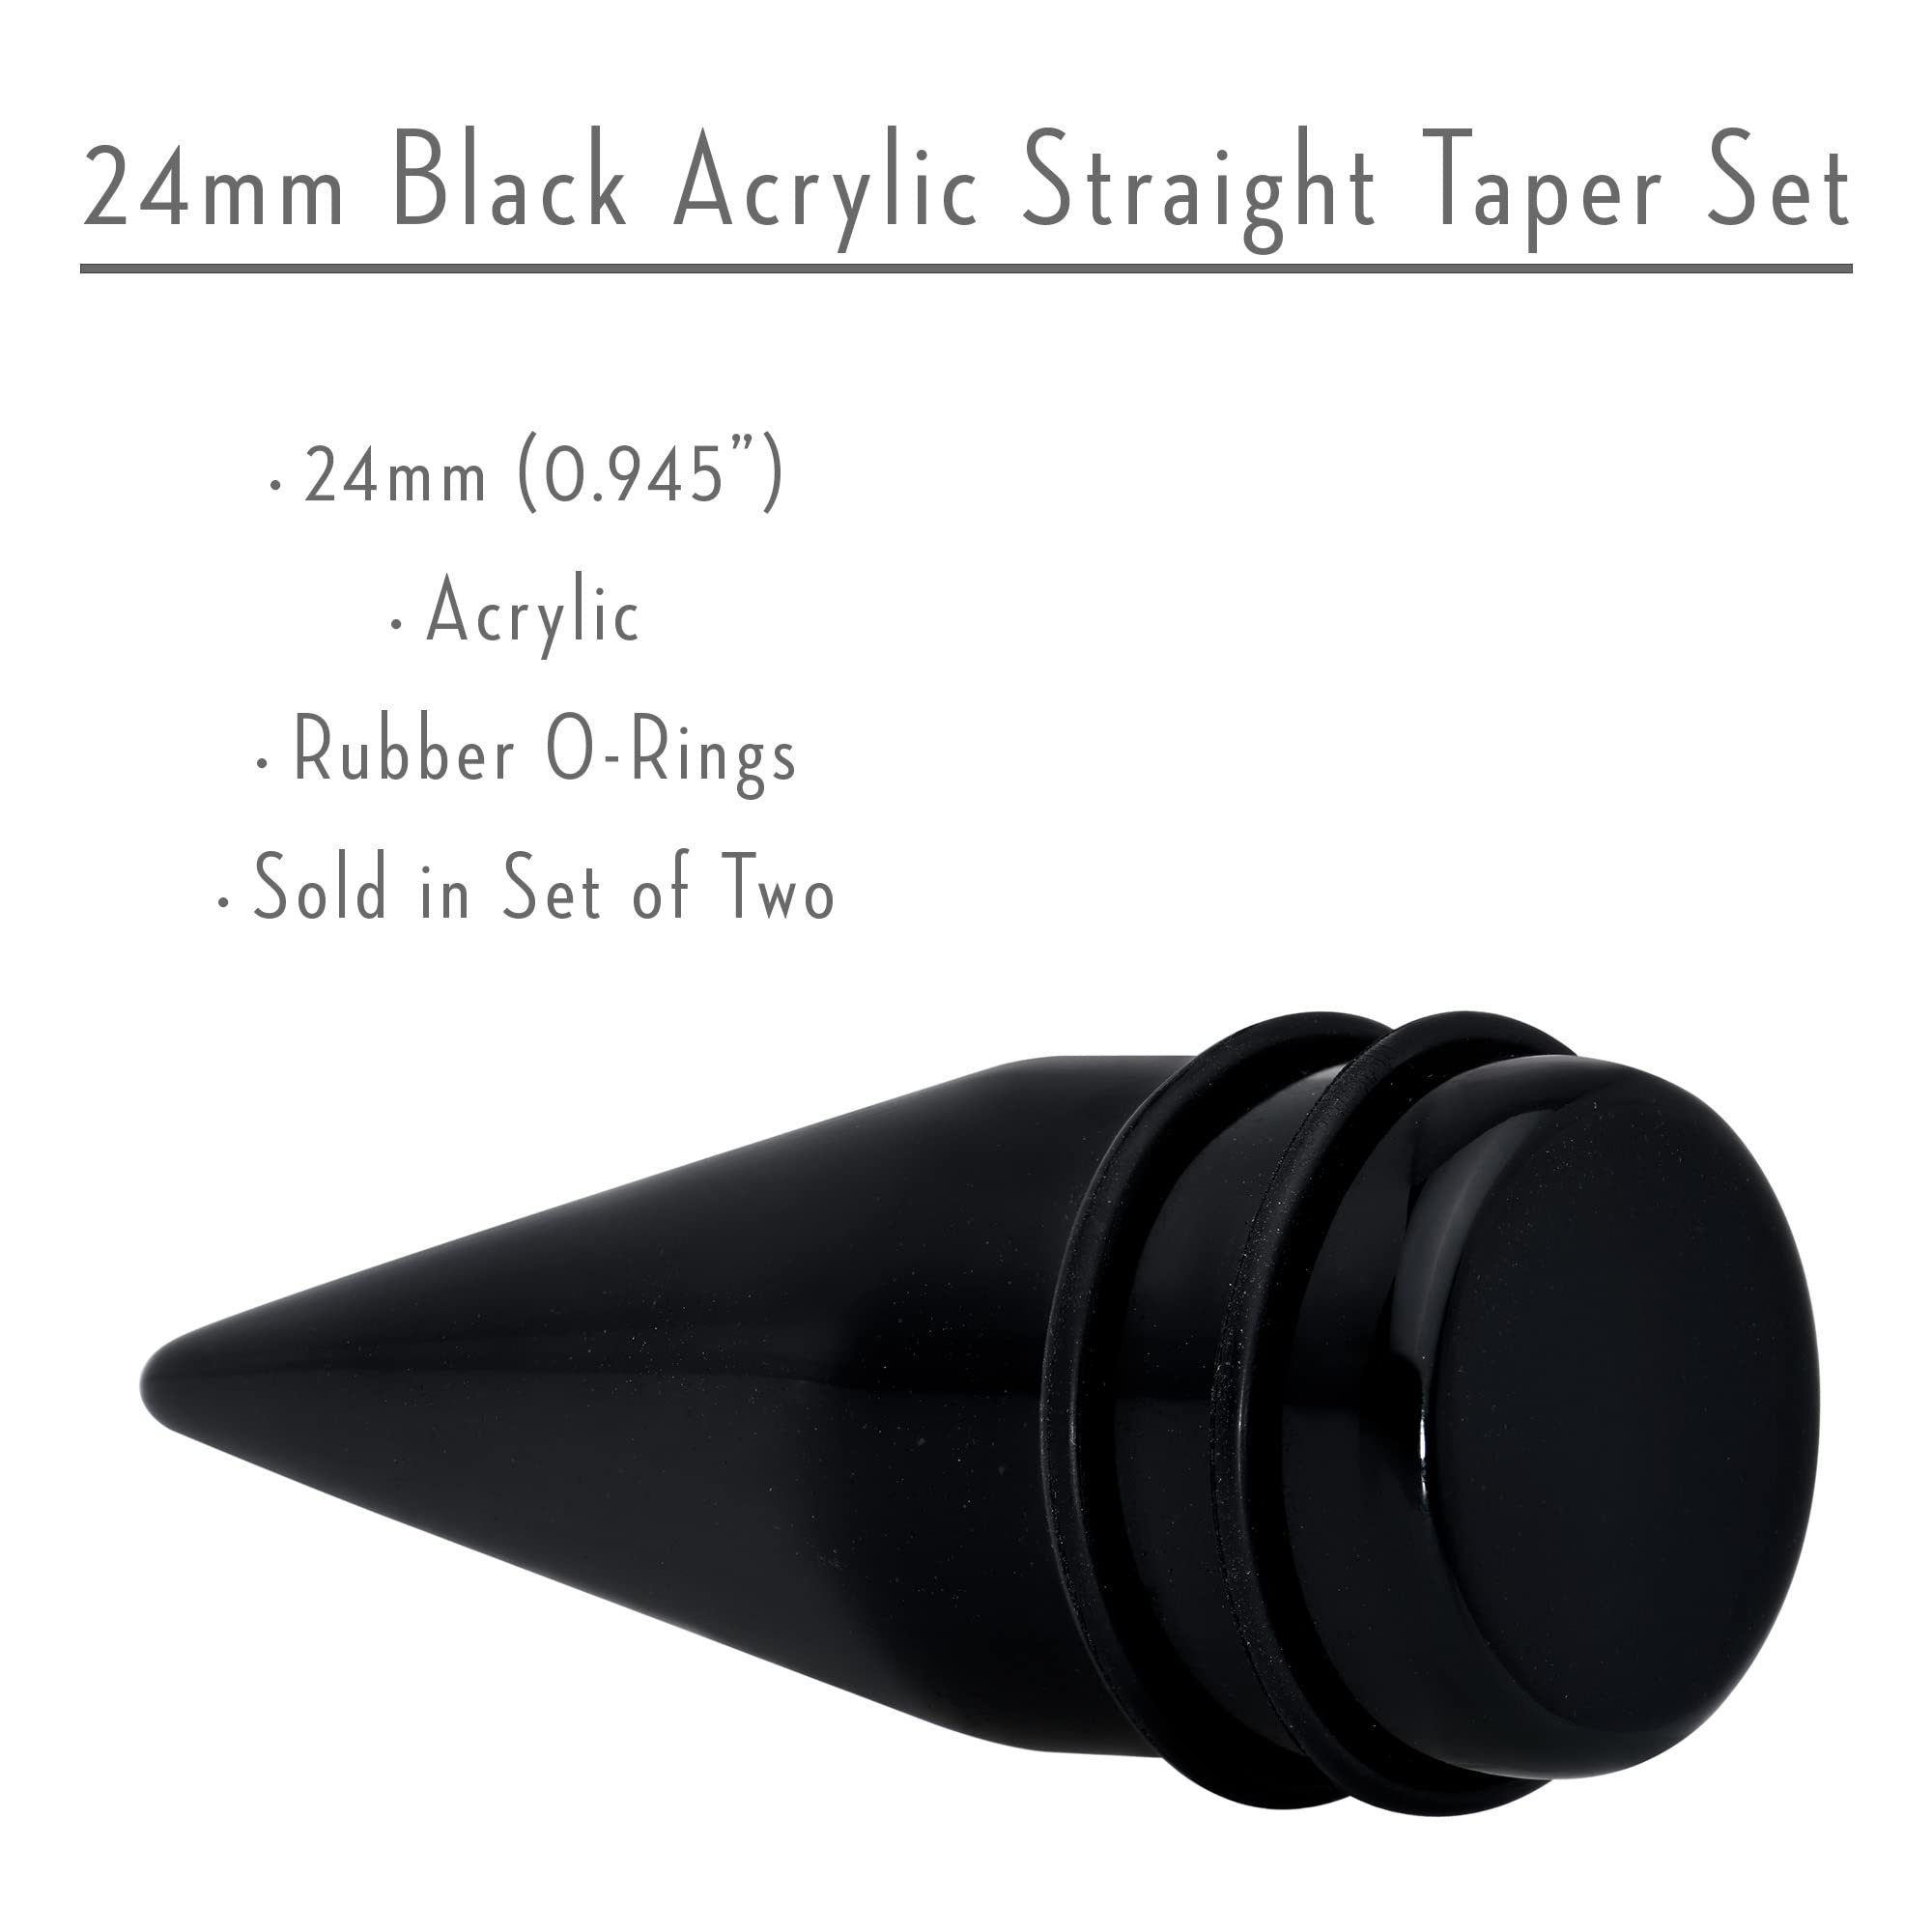 Body Candy Black Acrylic Straight Taper Set 24mm